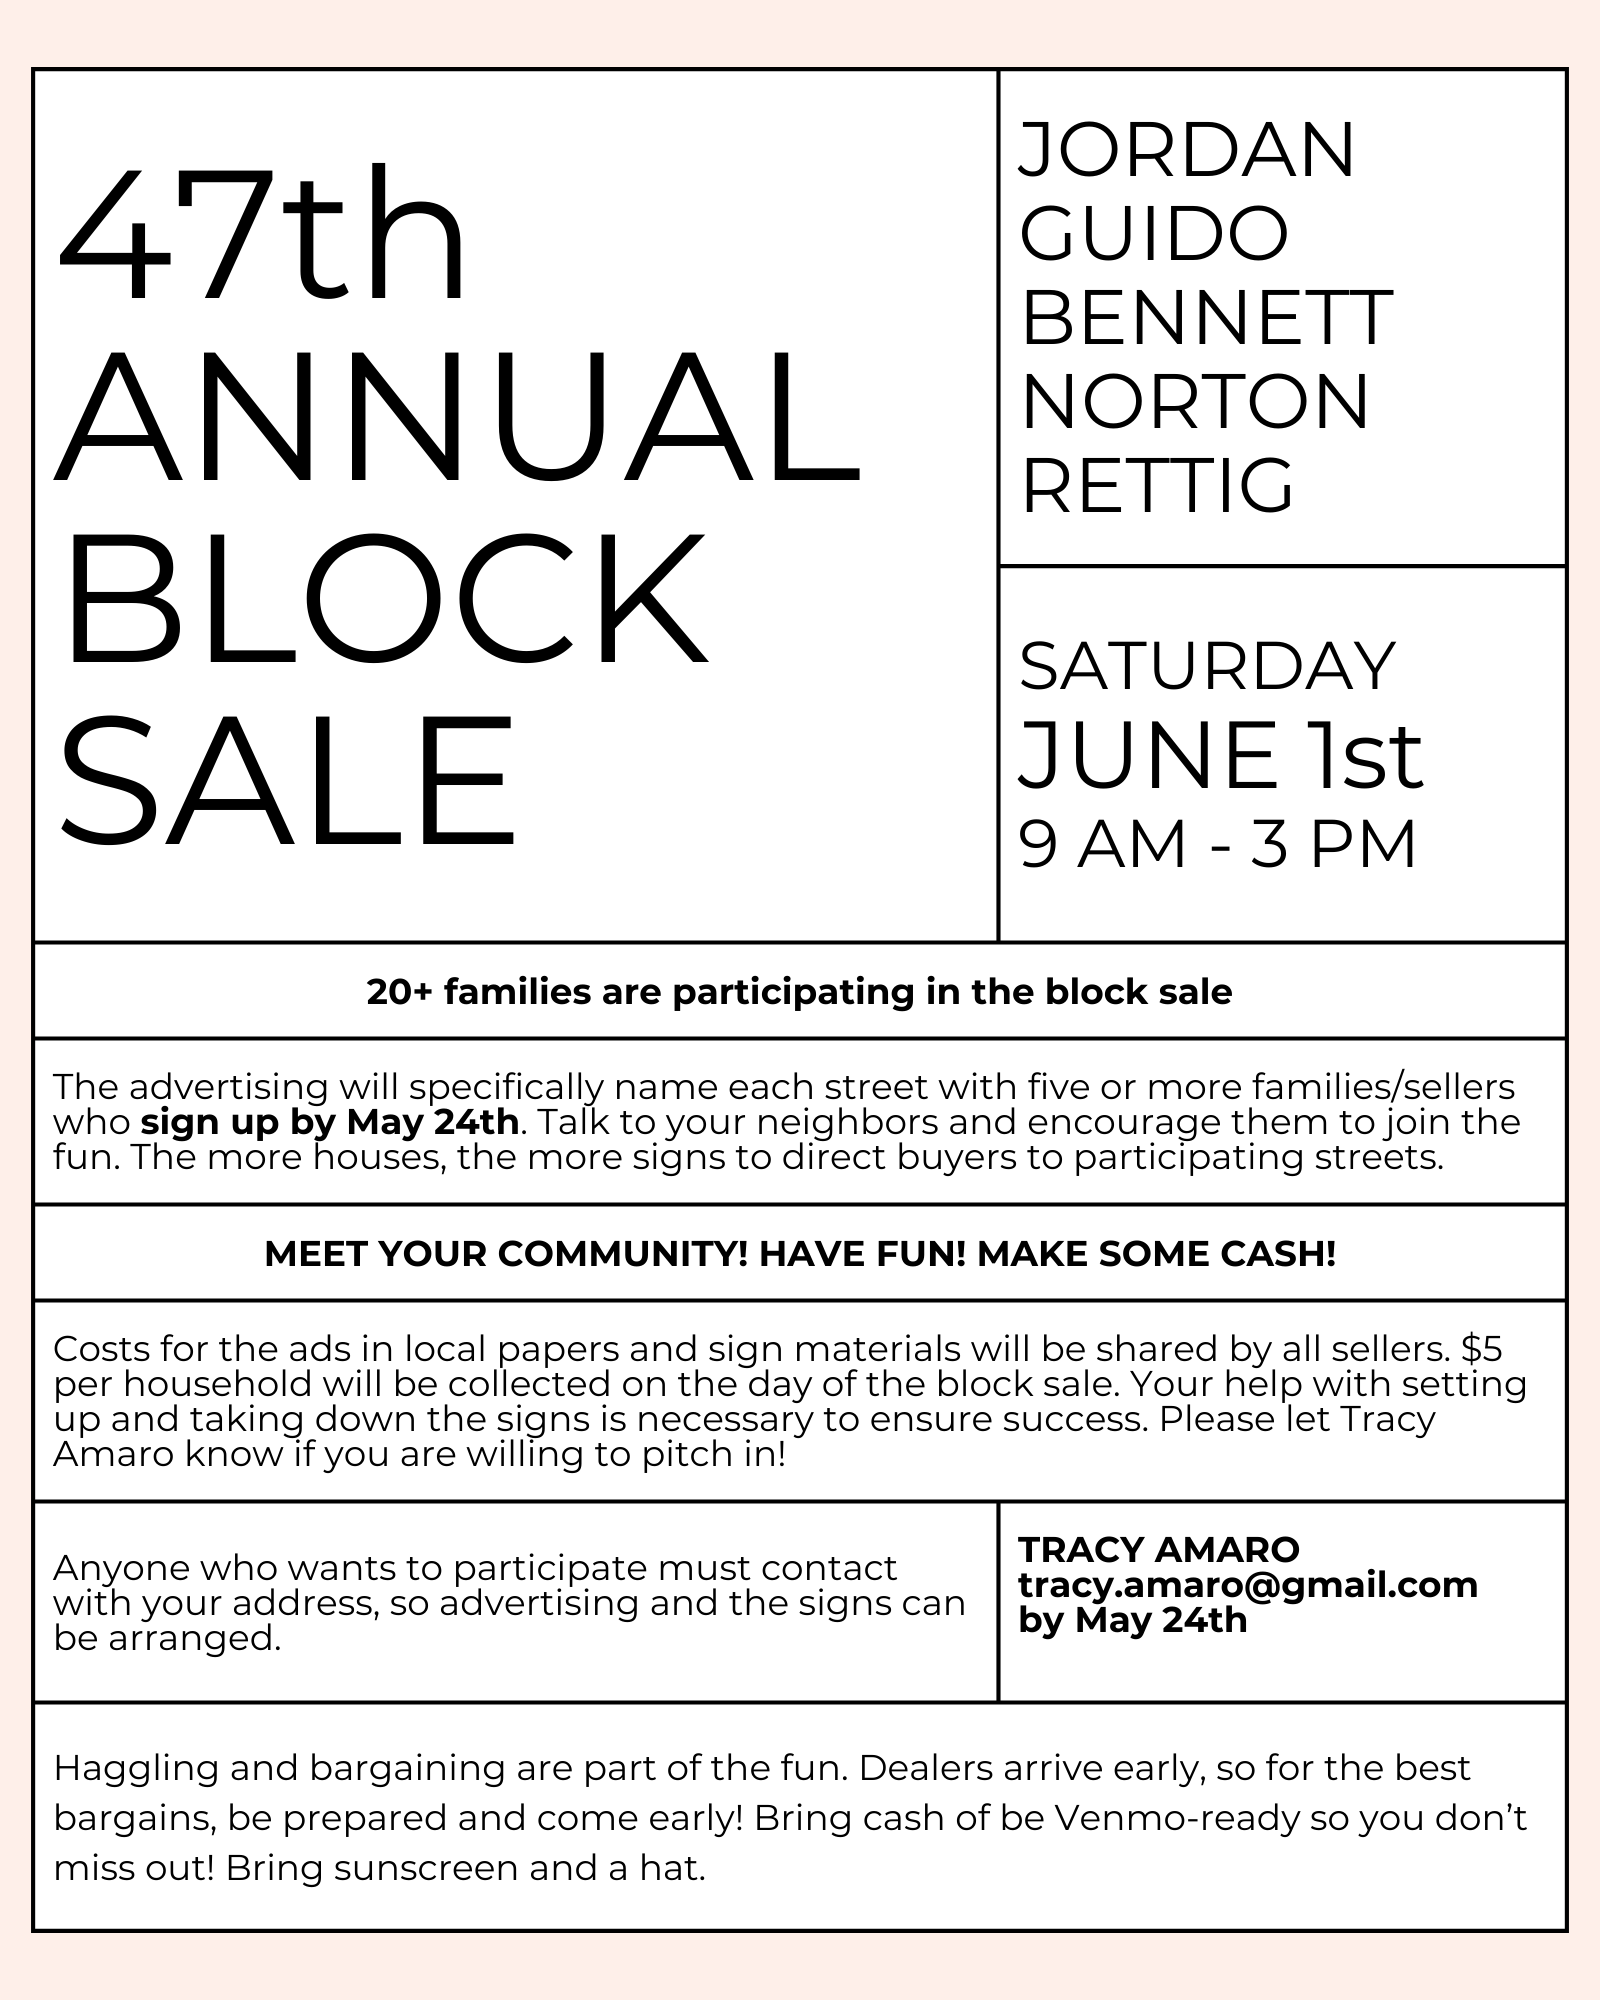 47th Annual Block Sale Flyer